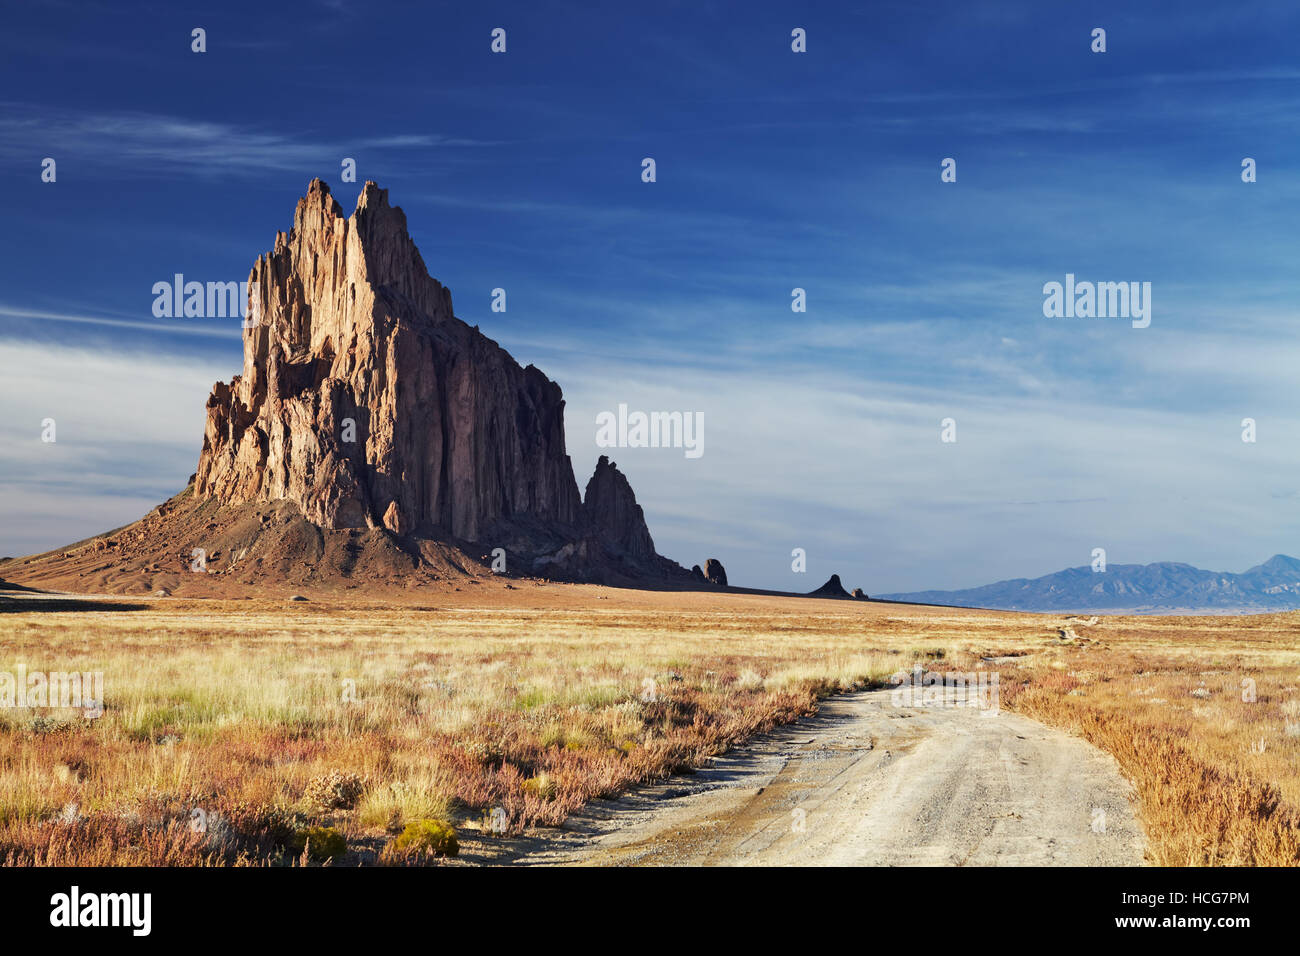 Shiprock, den großen vulkanischen Felsen Berg in Wüste Ebene von New Mexico, USA Stockfoto